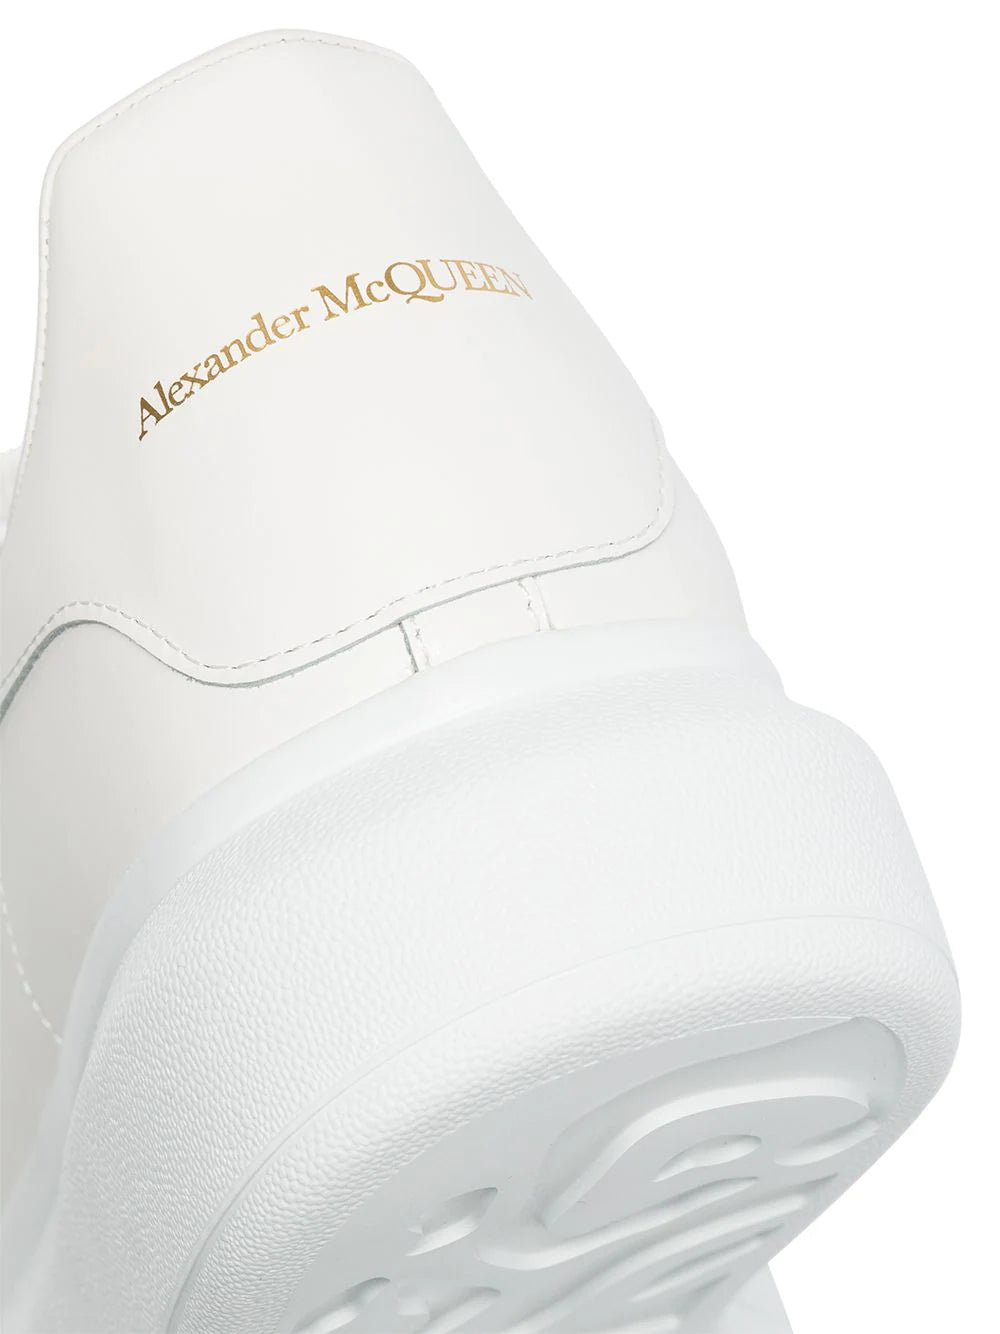 Shoellist | Alexander McQueen "Full White"